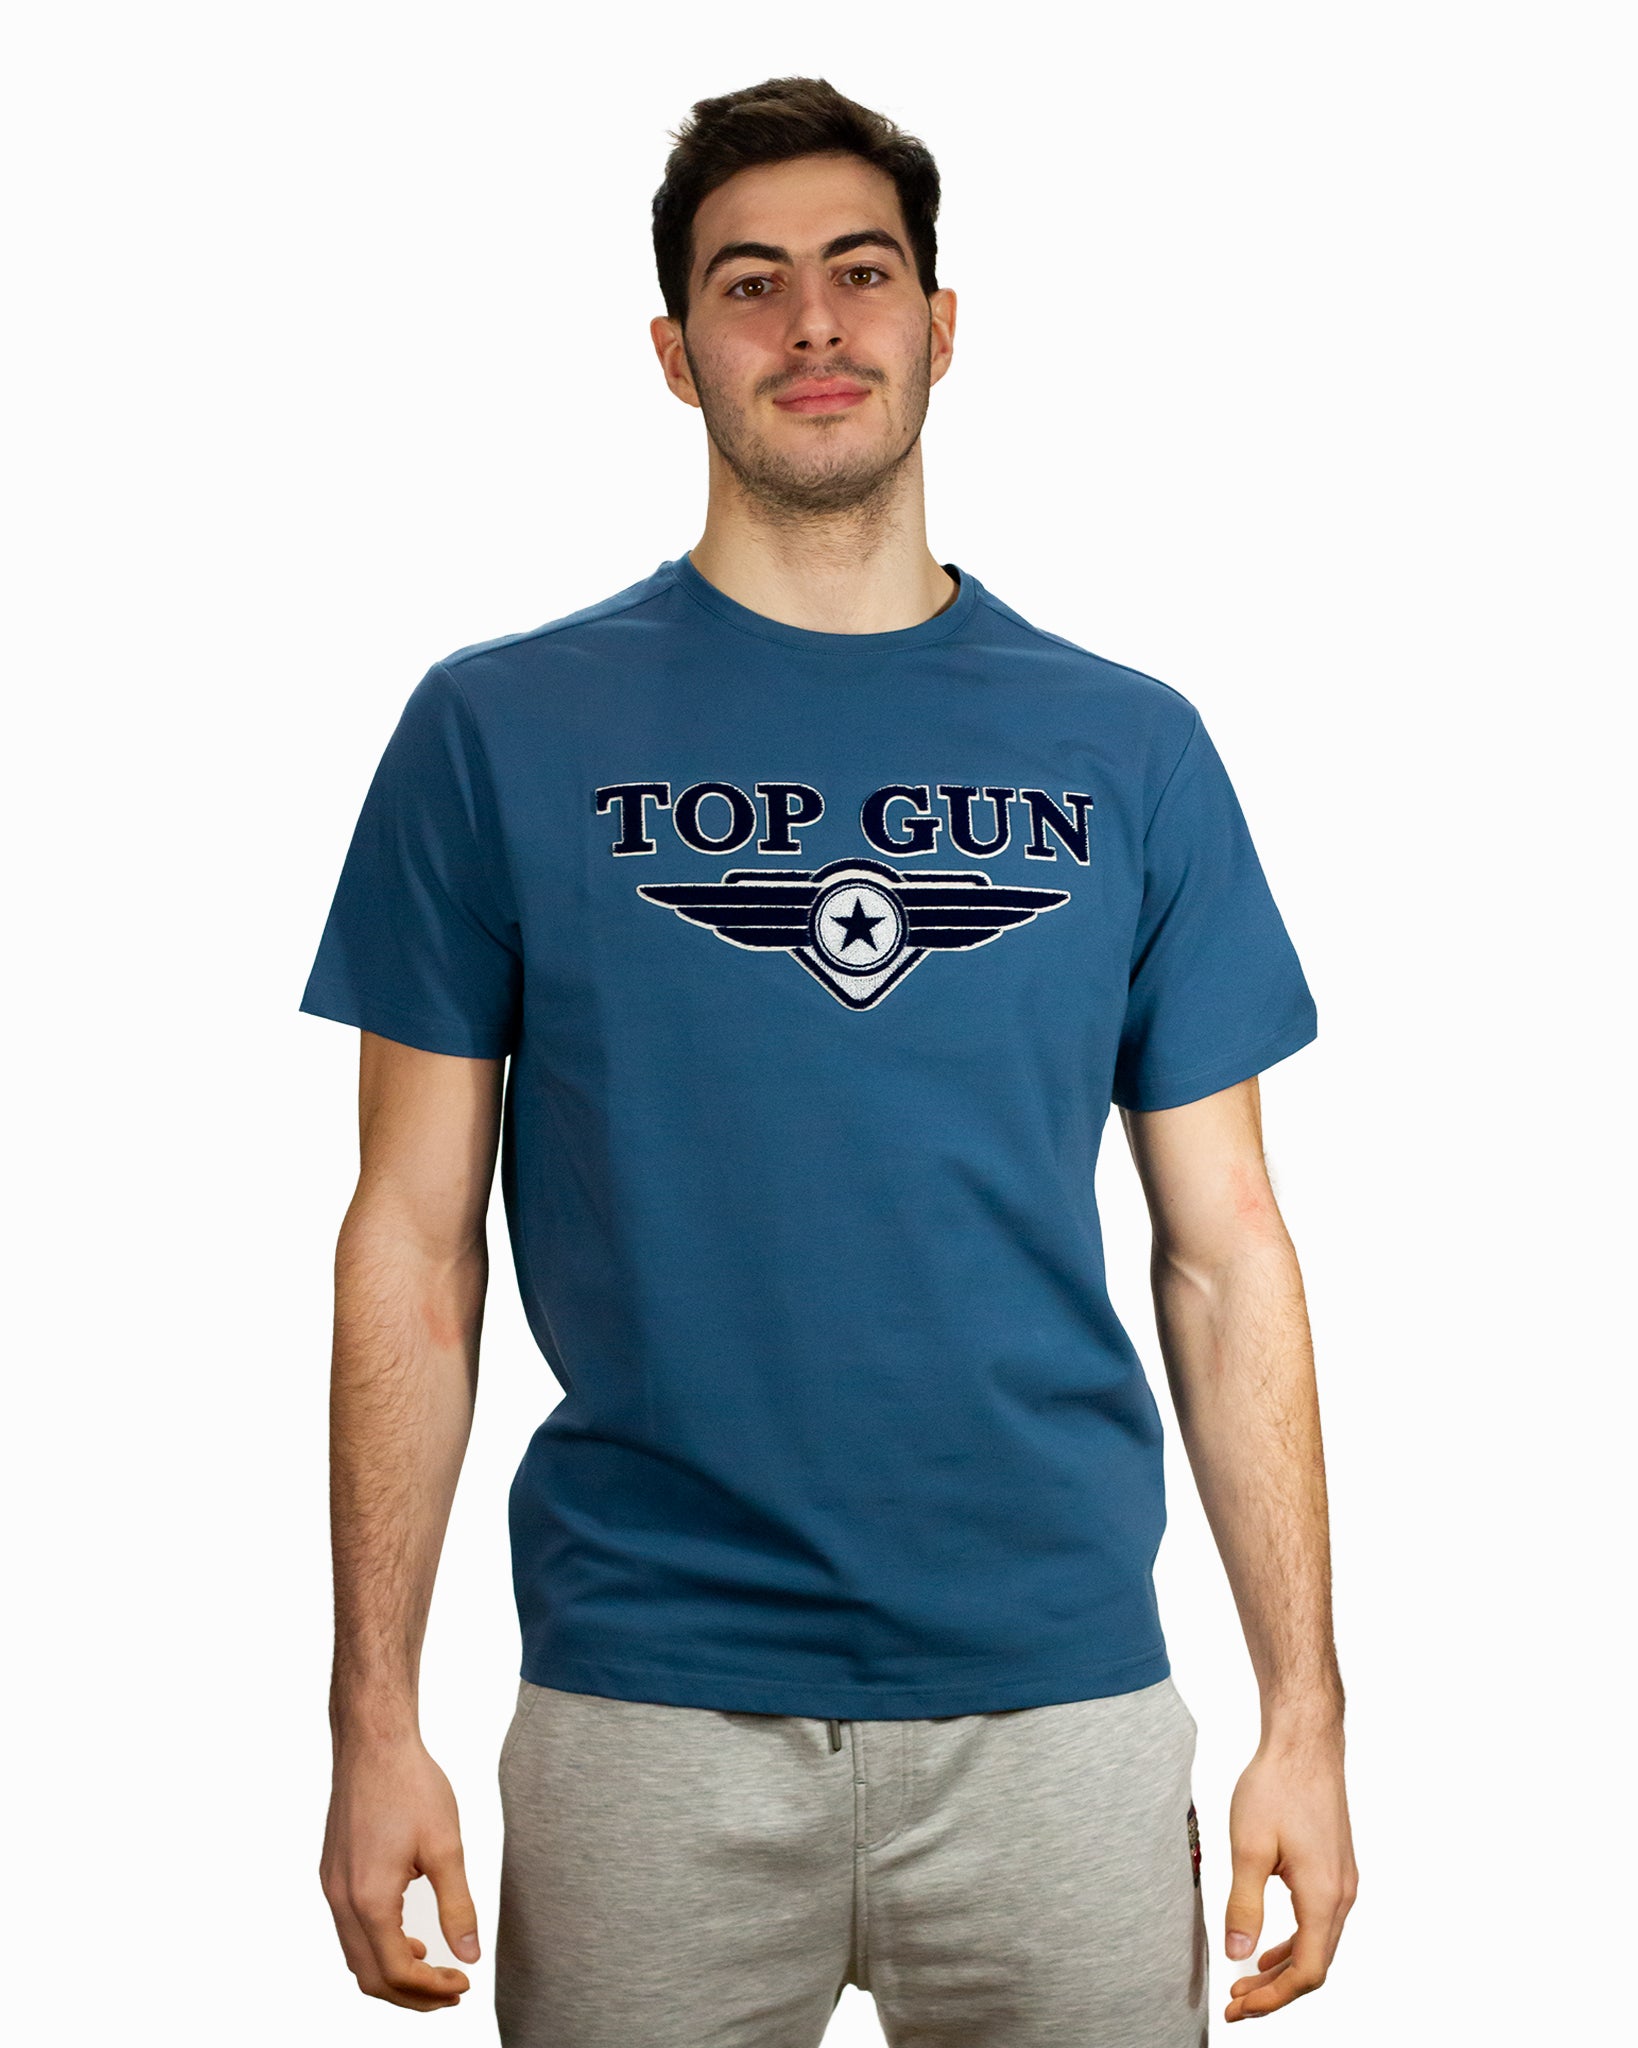 TOP GUN® EMBROIDERED LOGO TEE | TOP GUN Clothing | TOP GUN Original T-shirts  – Top Gun Store